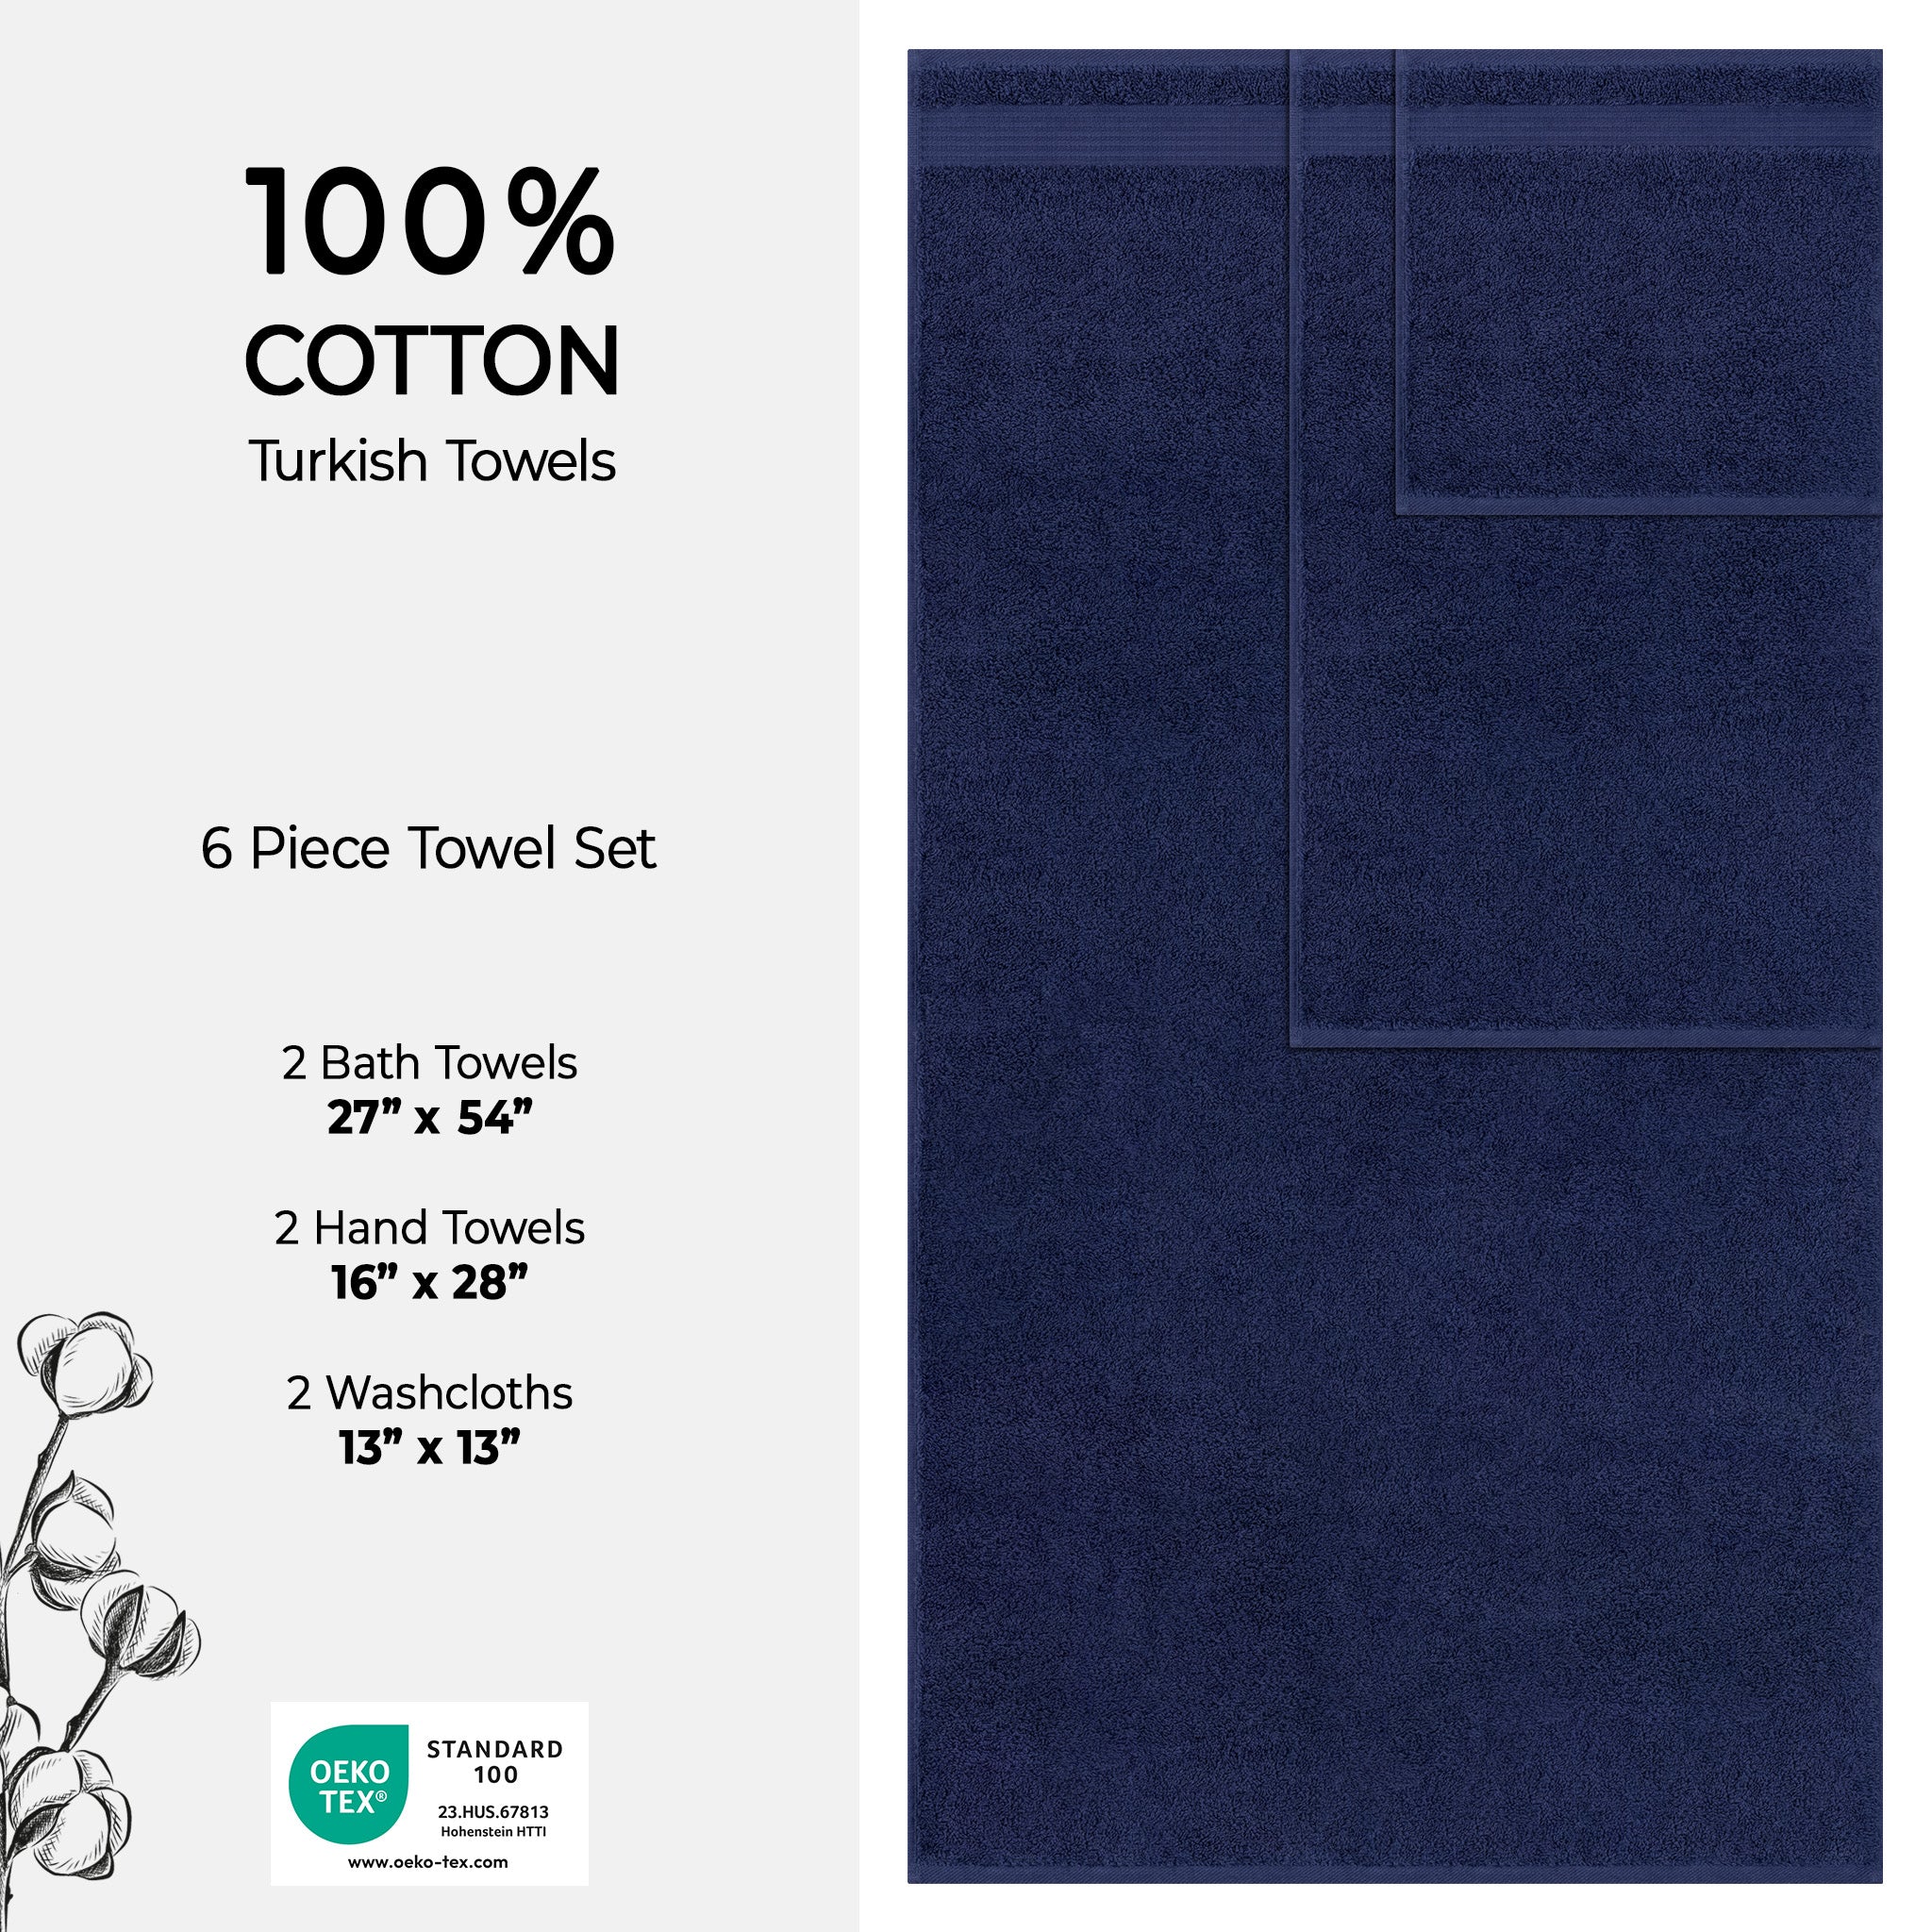 American Soft Linen Bekos 100% Cotton Turkish Towels 6 Piece Bath Towel Set -navy-blue-04